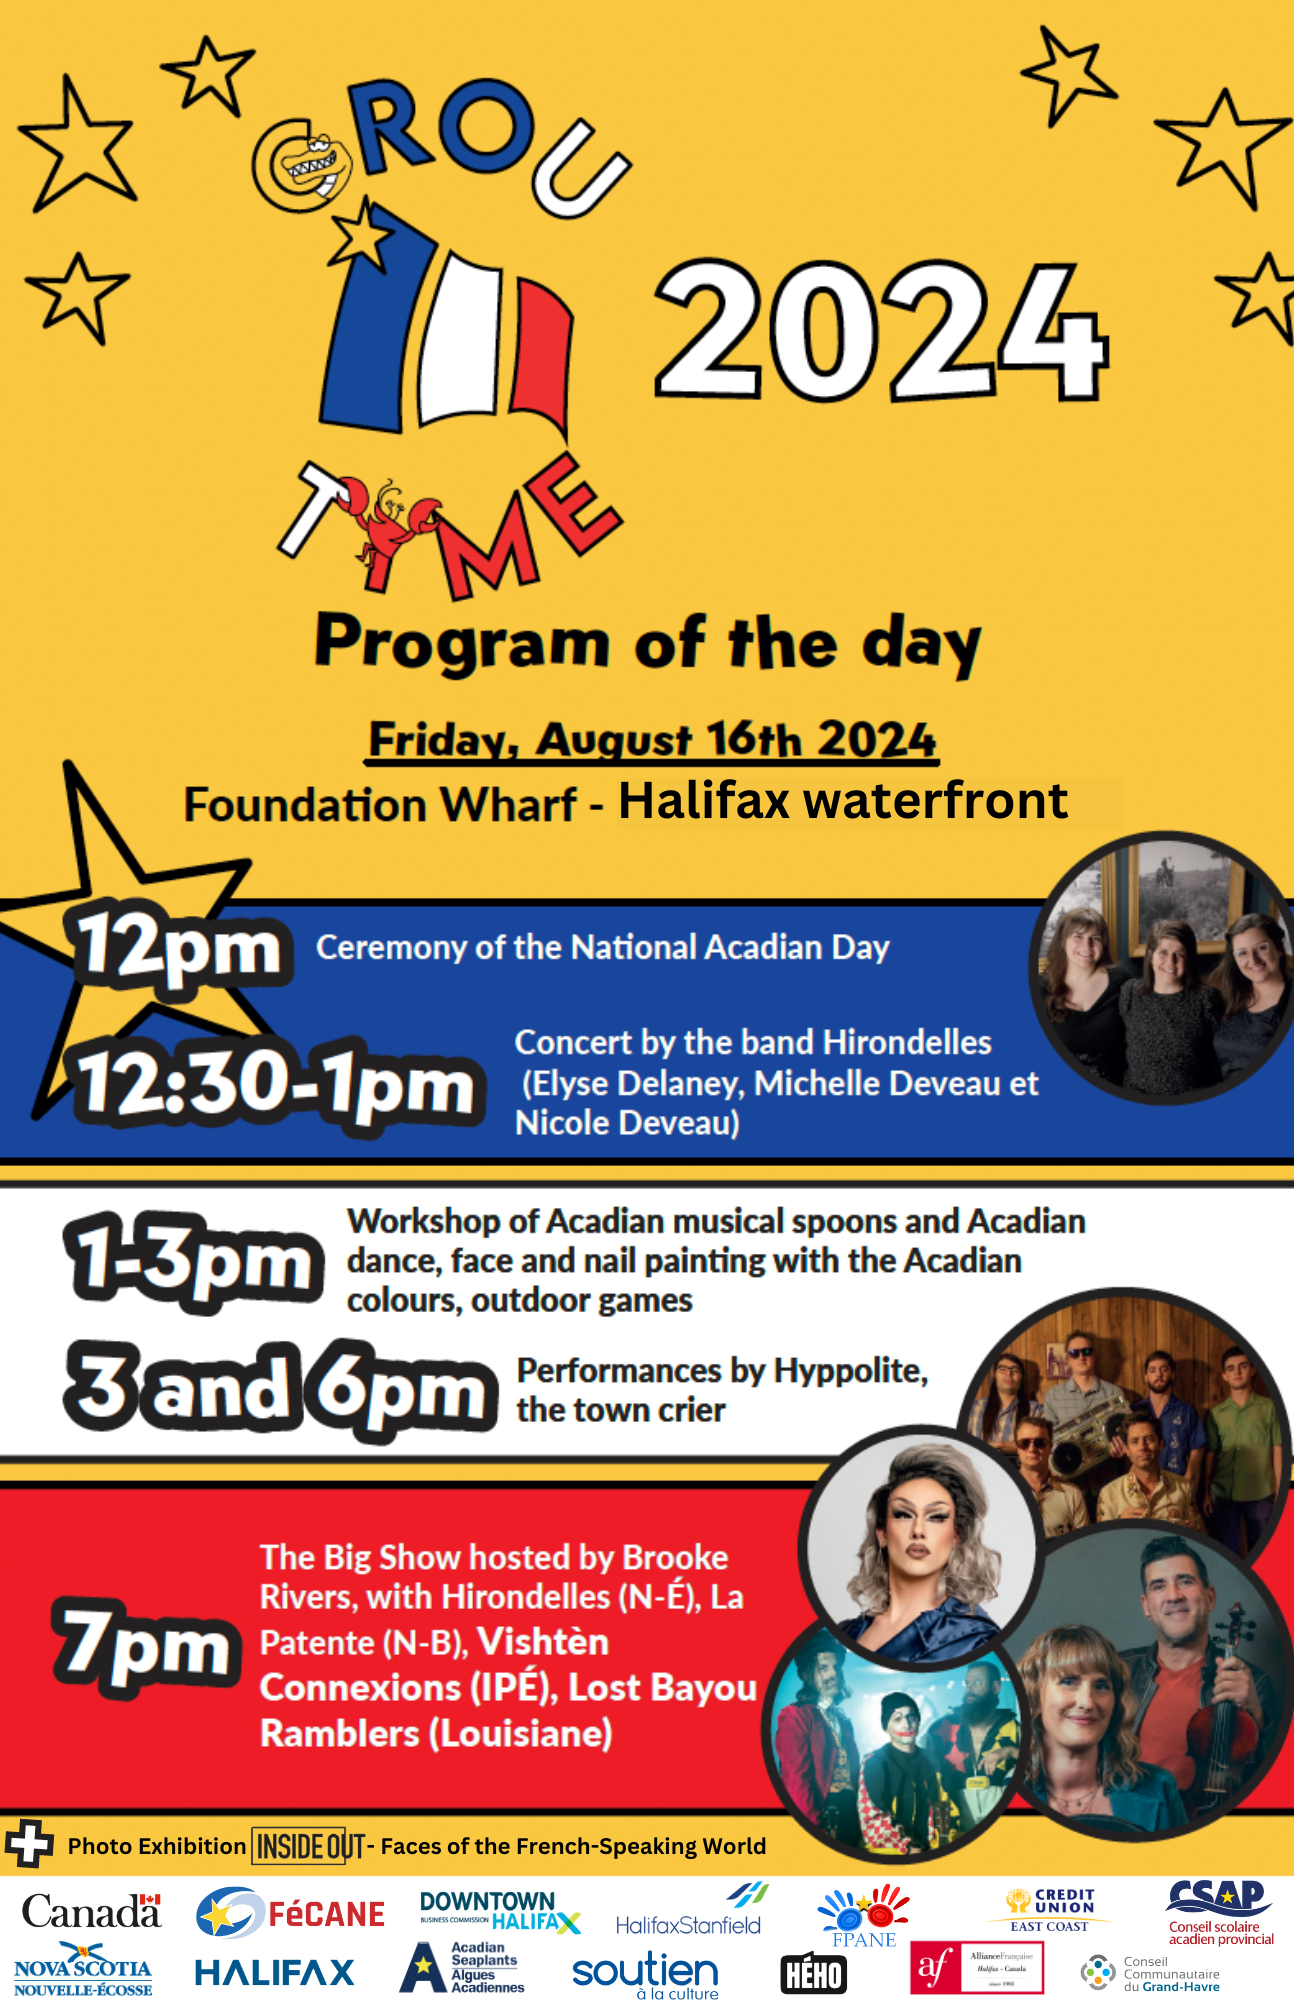 Program of Festival Grou Tyme 2024 in Halifax